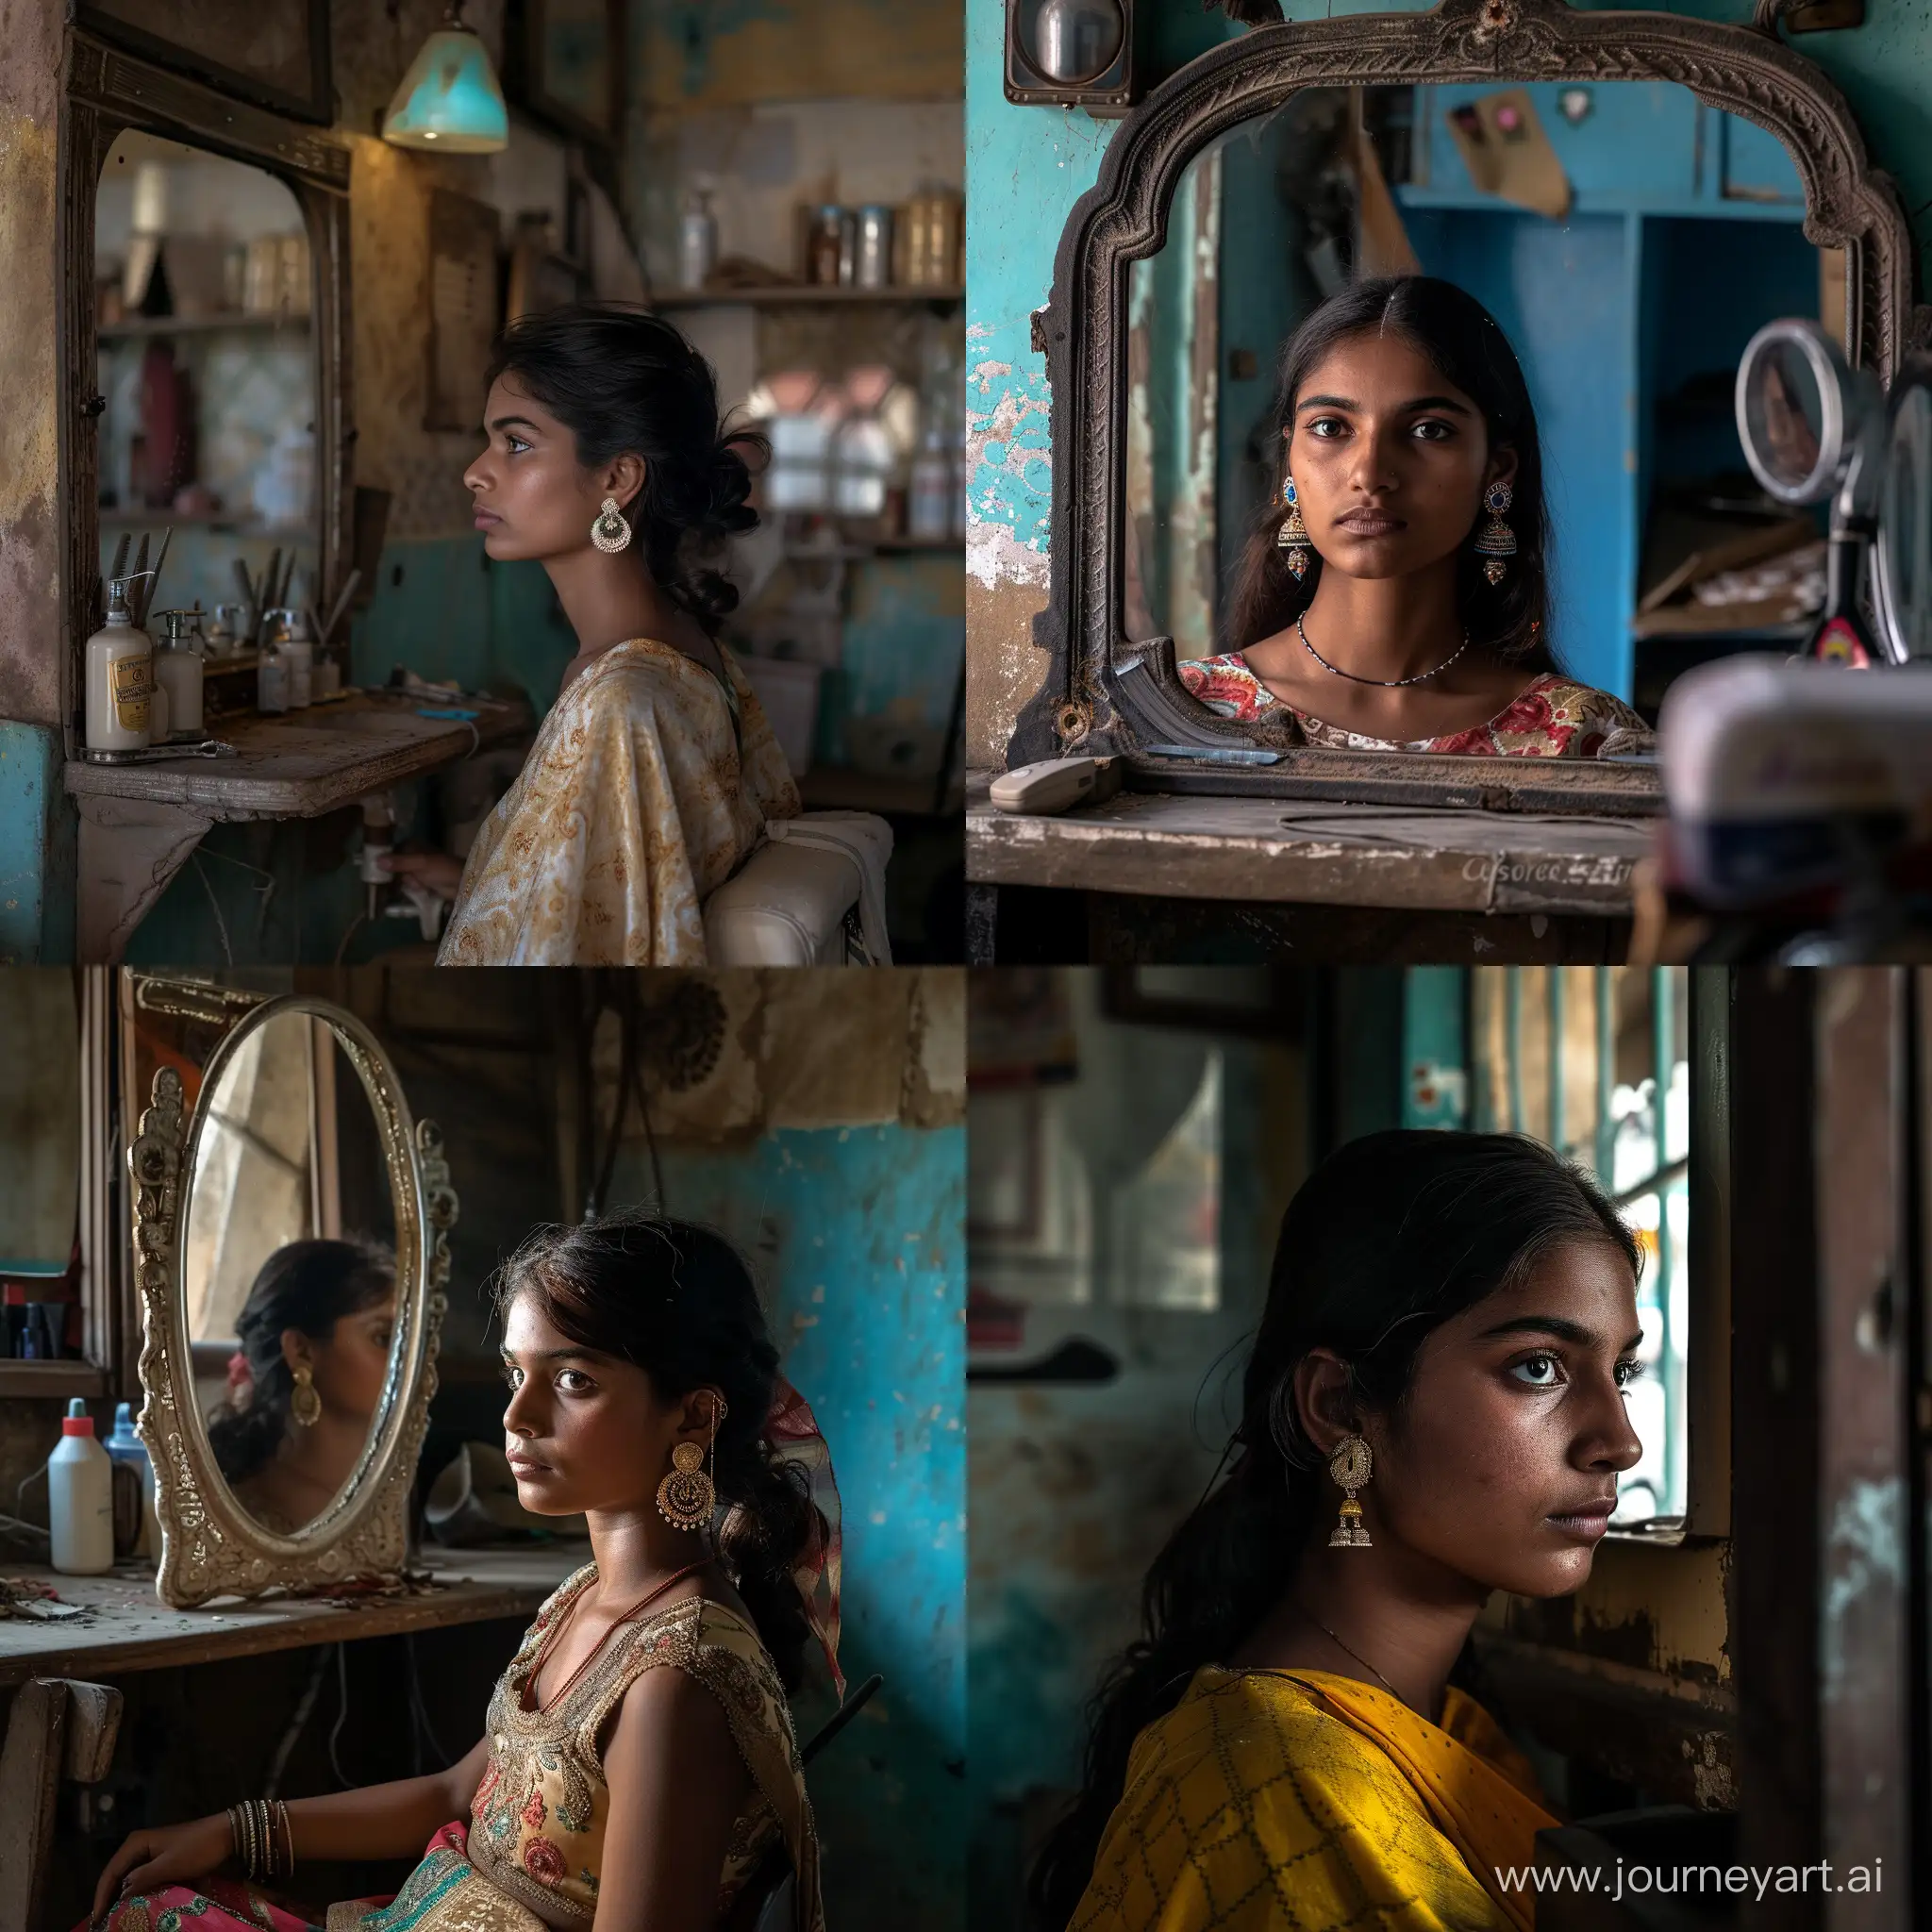 Rabari-Woman-Admiring-Earrings-in-Rustic-Barbershop